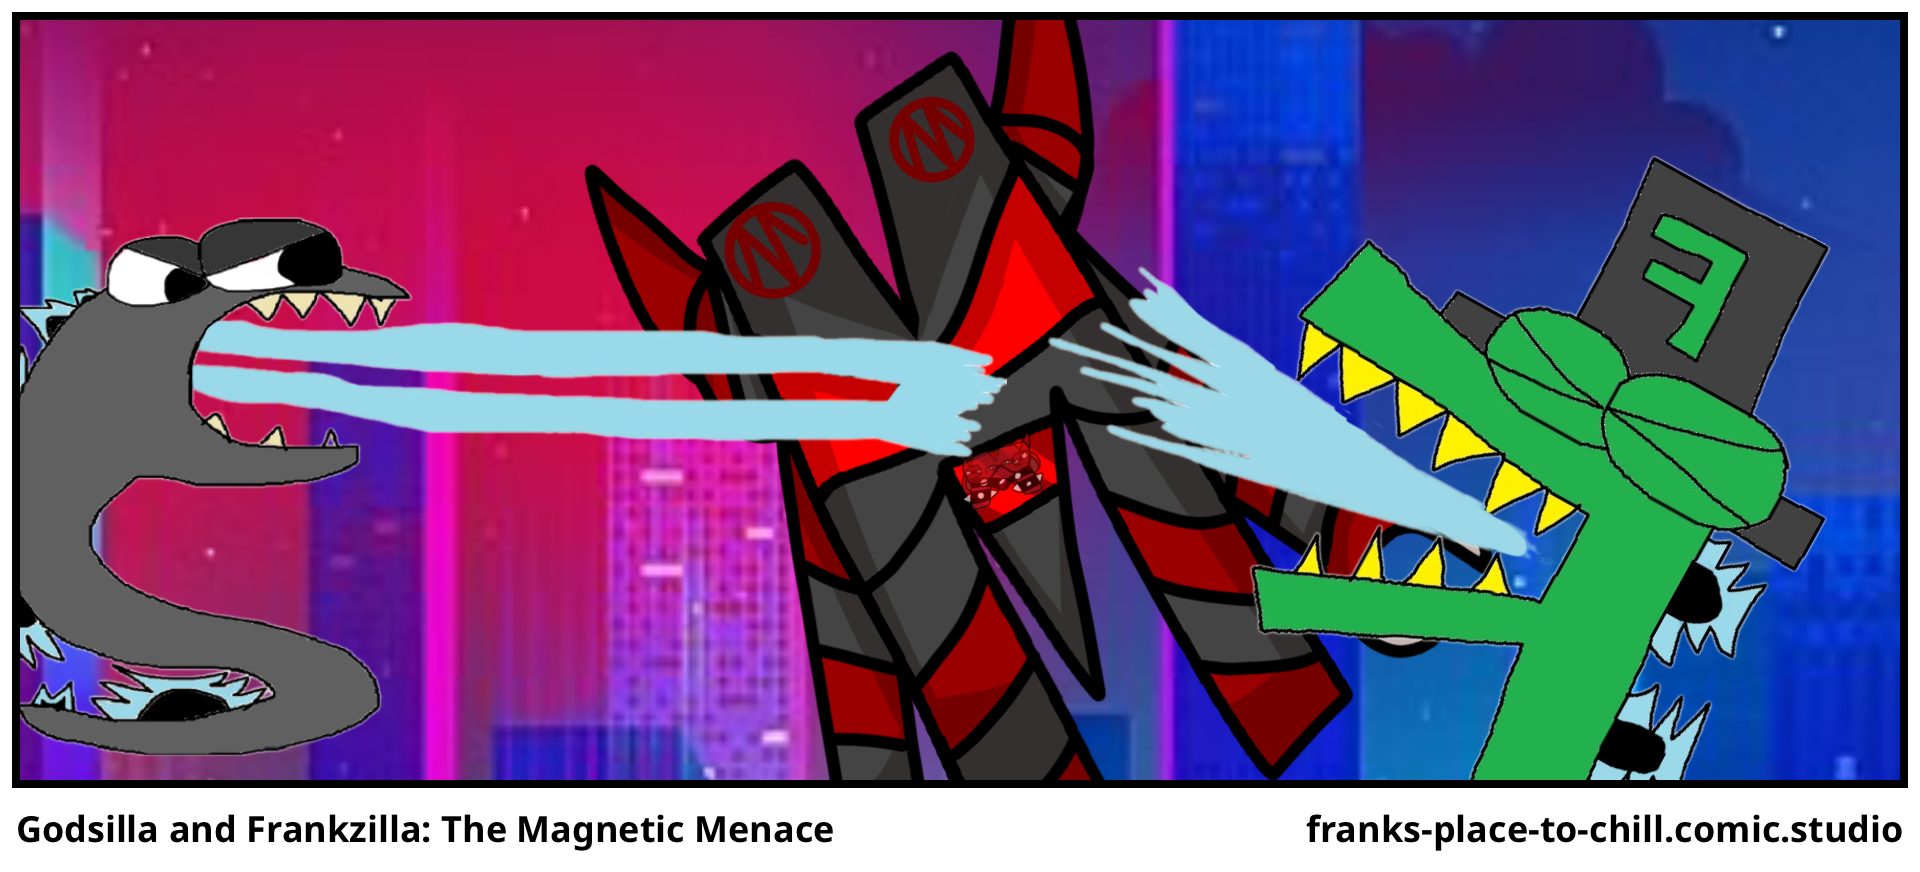 Godsilla and Frankzilla: The Magnetic Menace